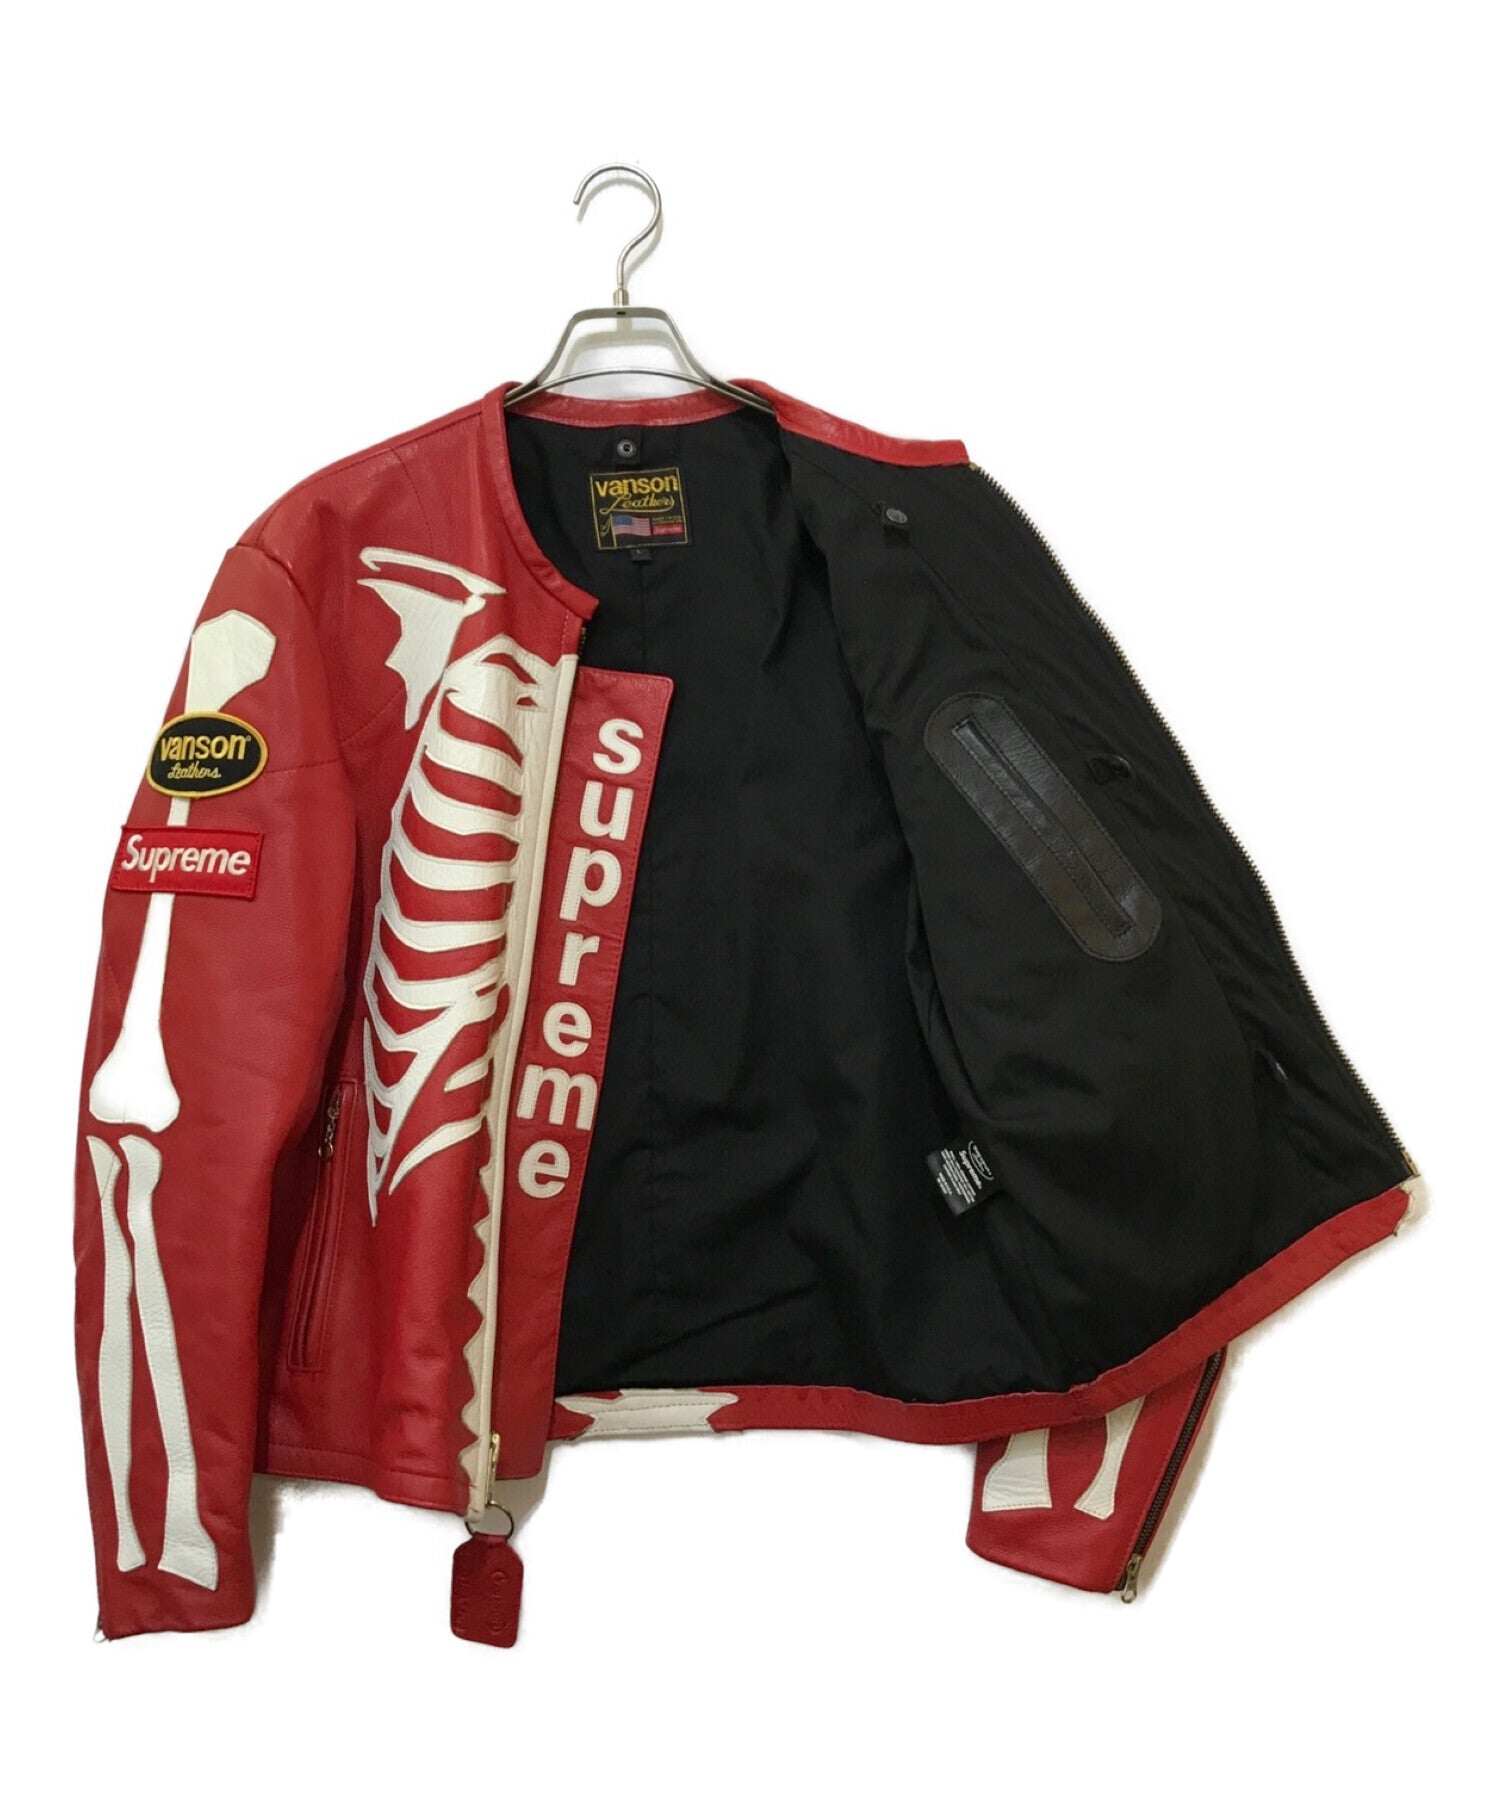 Supreme×Vanson Leather Bones Jacket